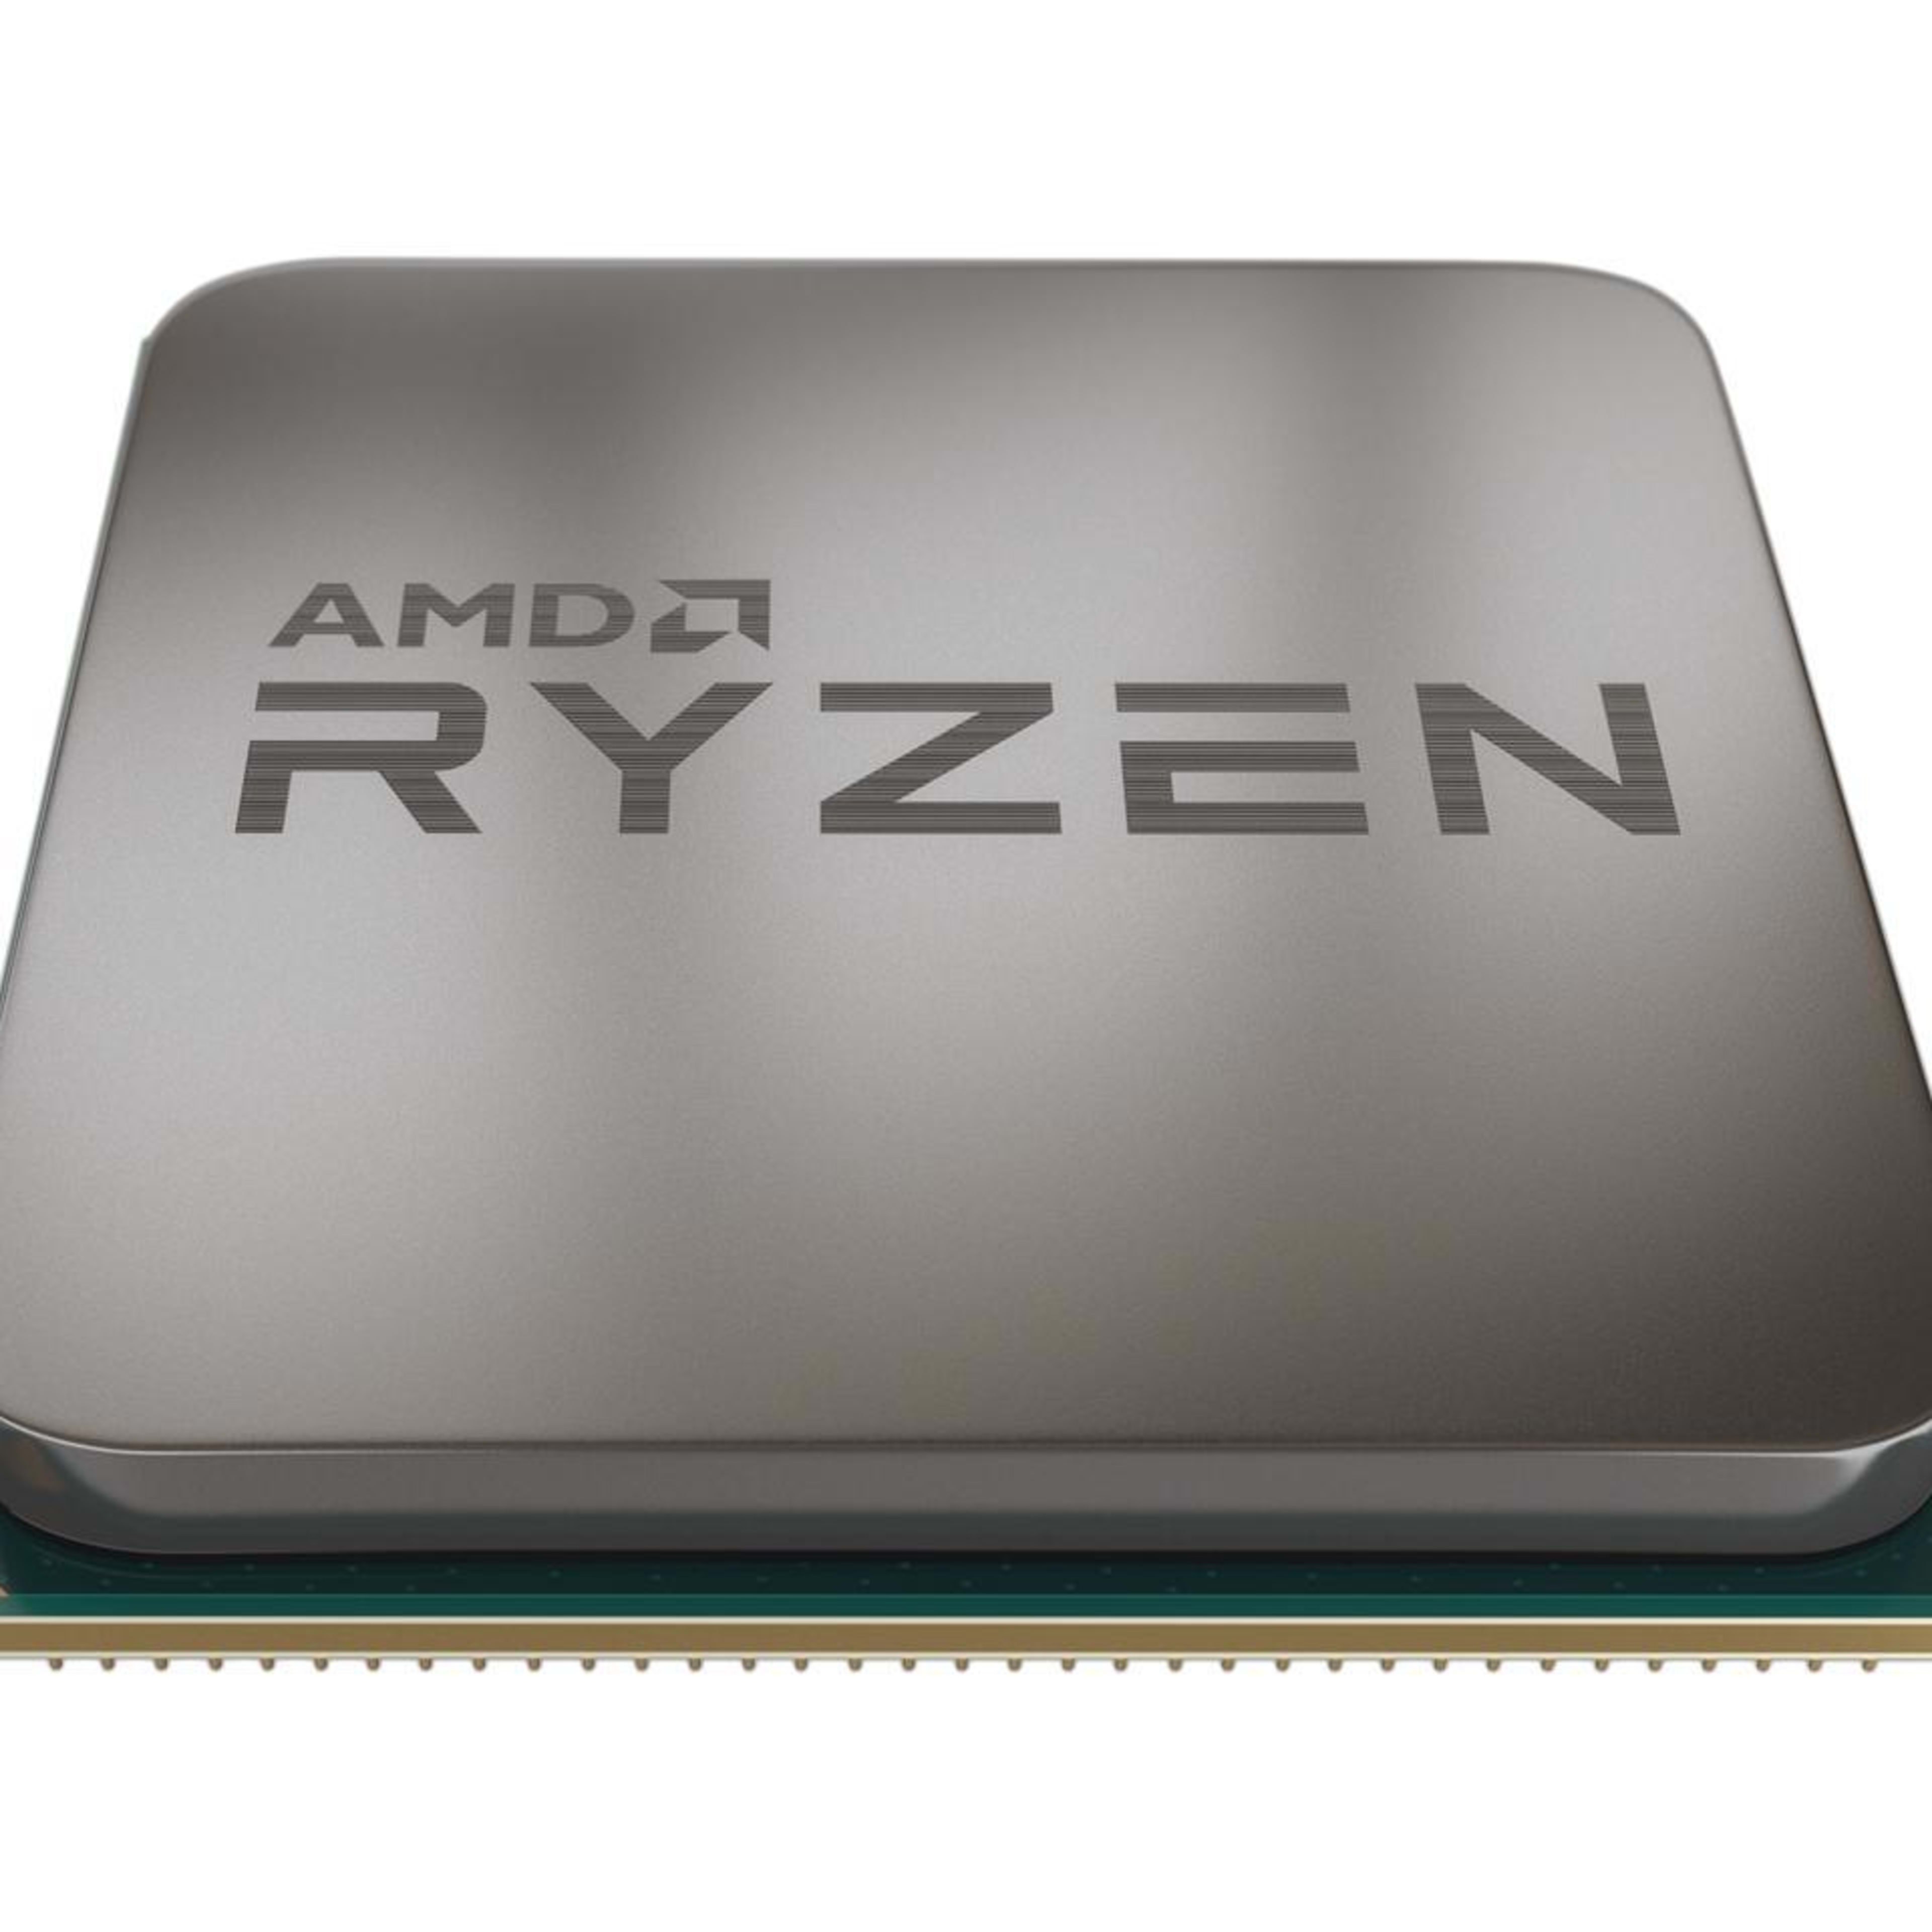 AMD Ryzen 9 5900X Desktop Processor (4.8GHz, 12 Cores, Socket AM4) Box -... New